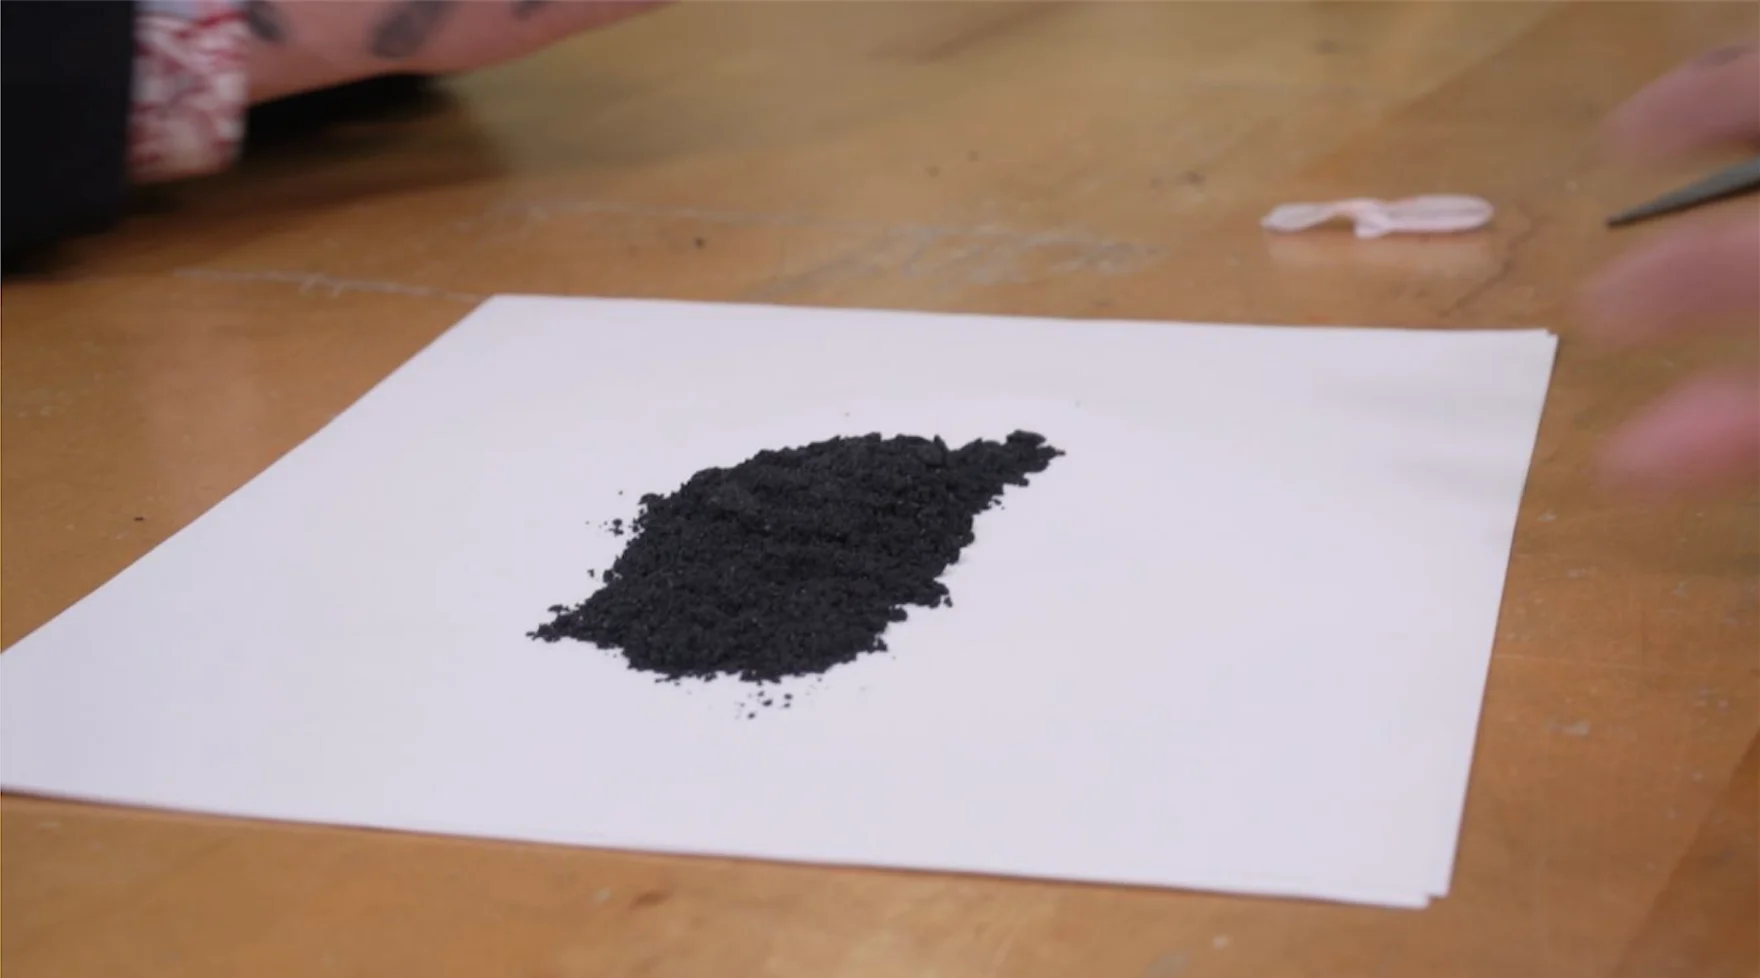 UGC: By Rachel Schoutsen, hand warmersTo recap the pile of “dirt” is iron powder, salt, activated charcoal, vermiculite and water. 